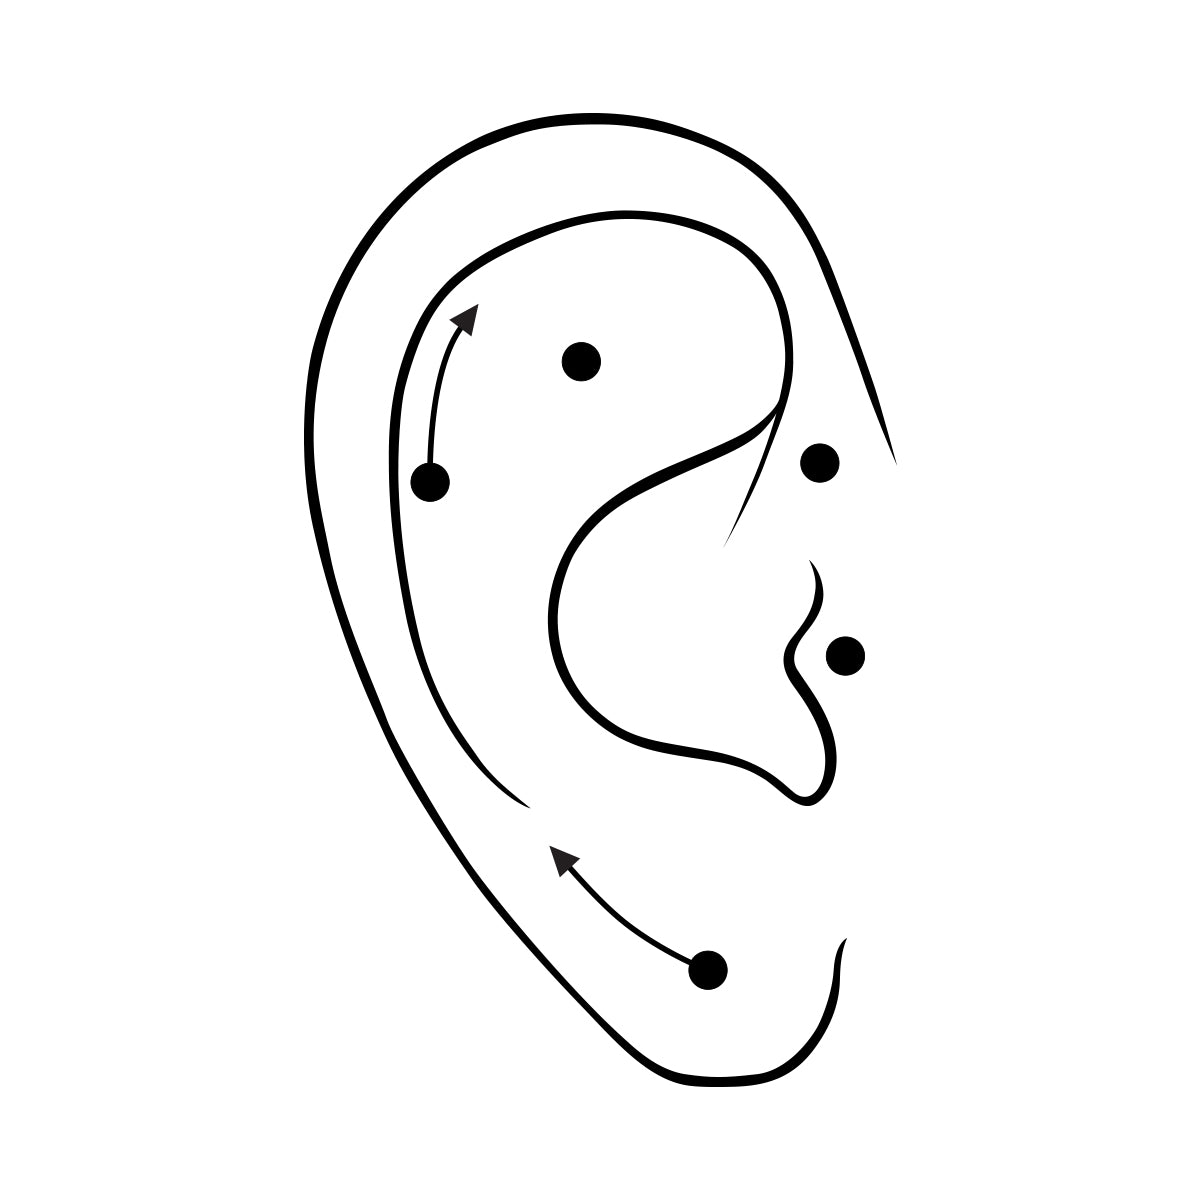 Piercing d'oreille en titane avec barre de zirconias